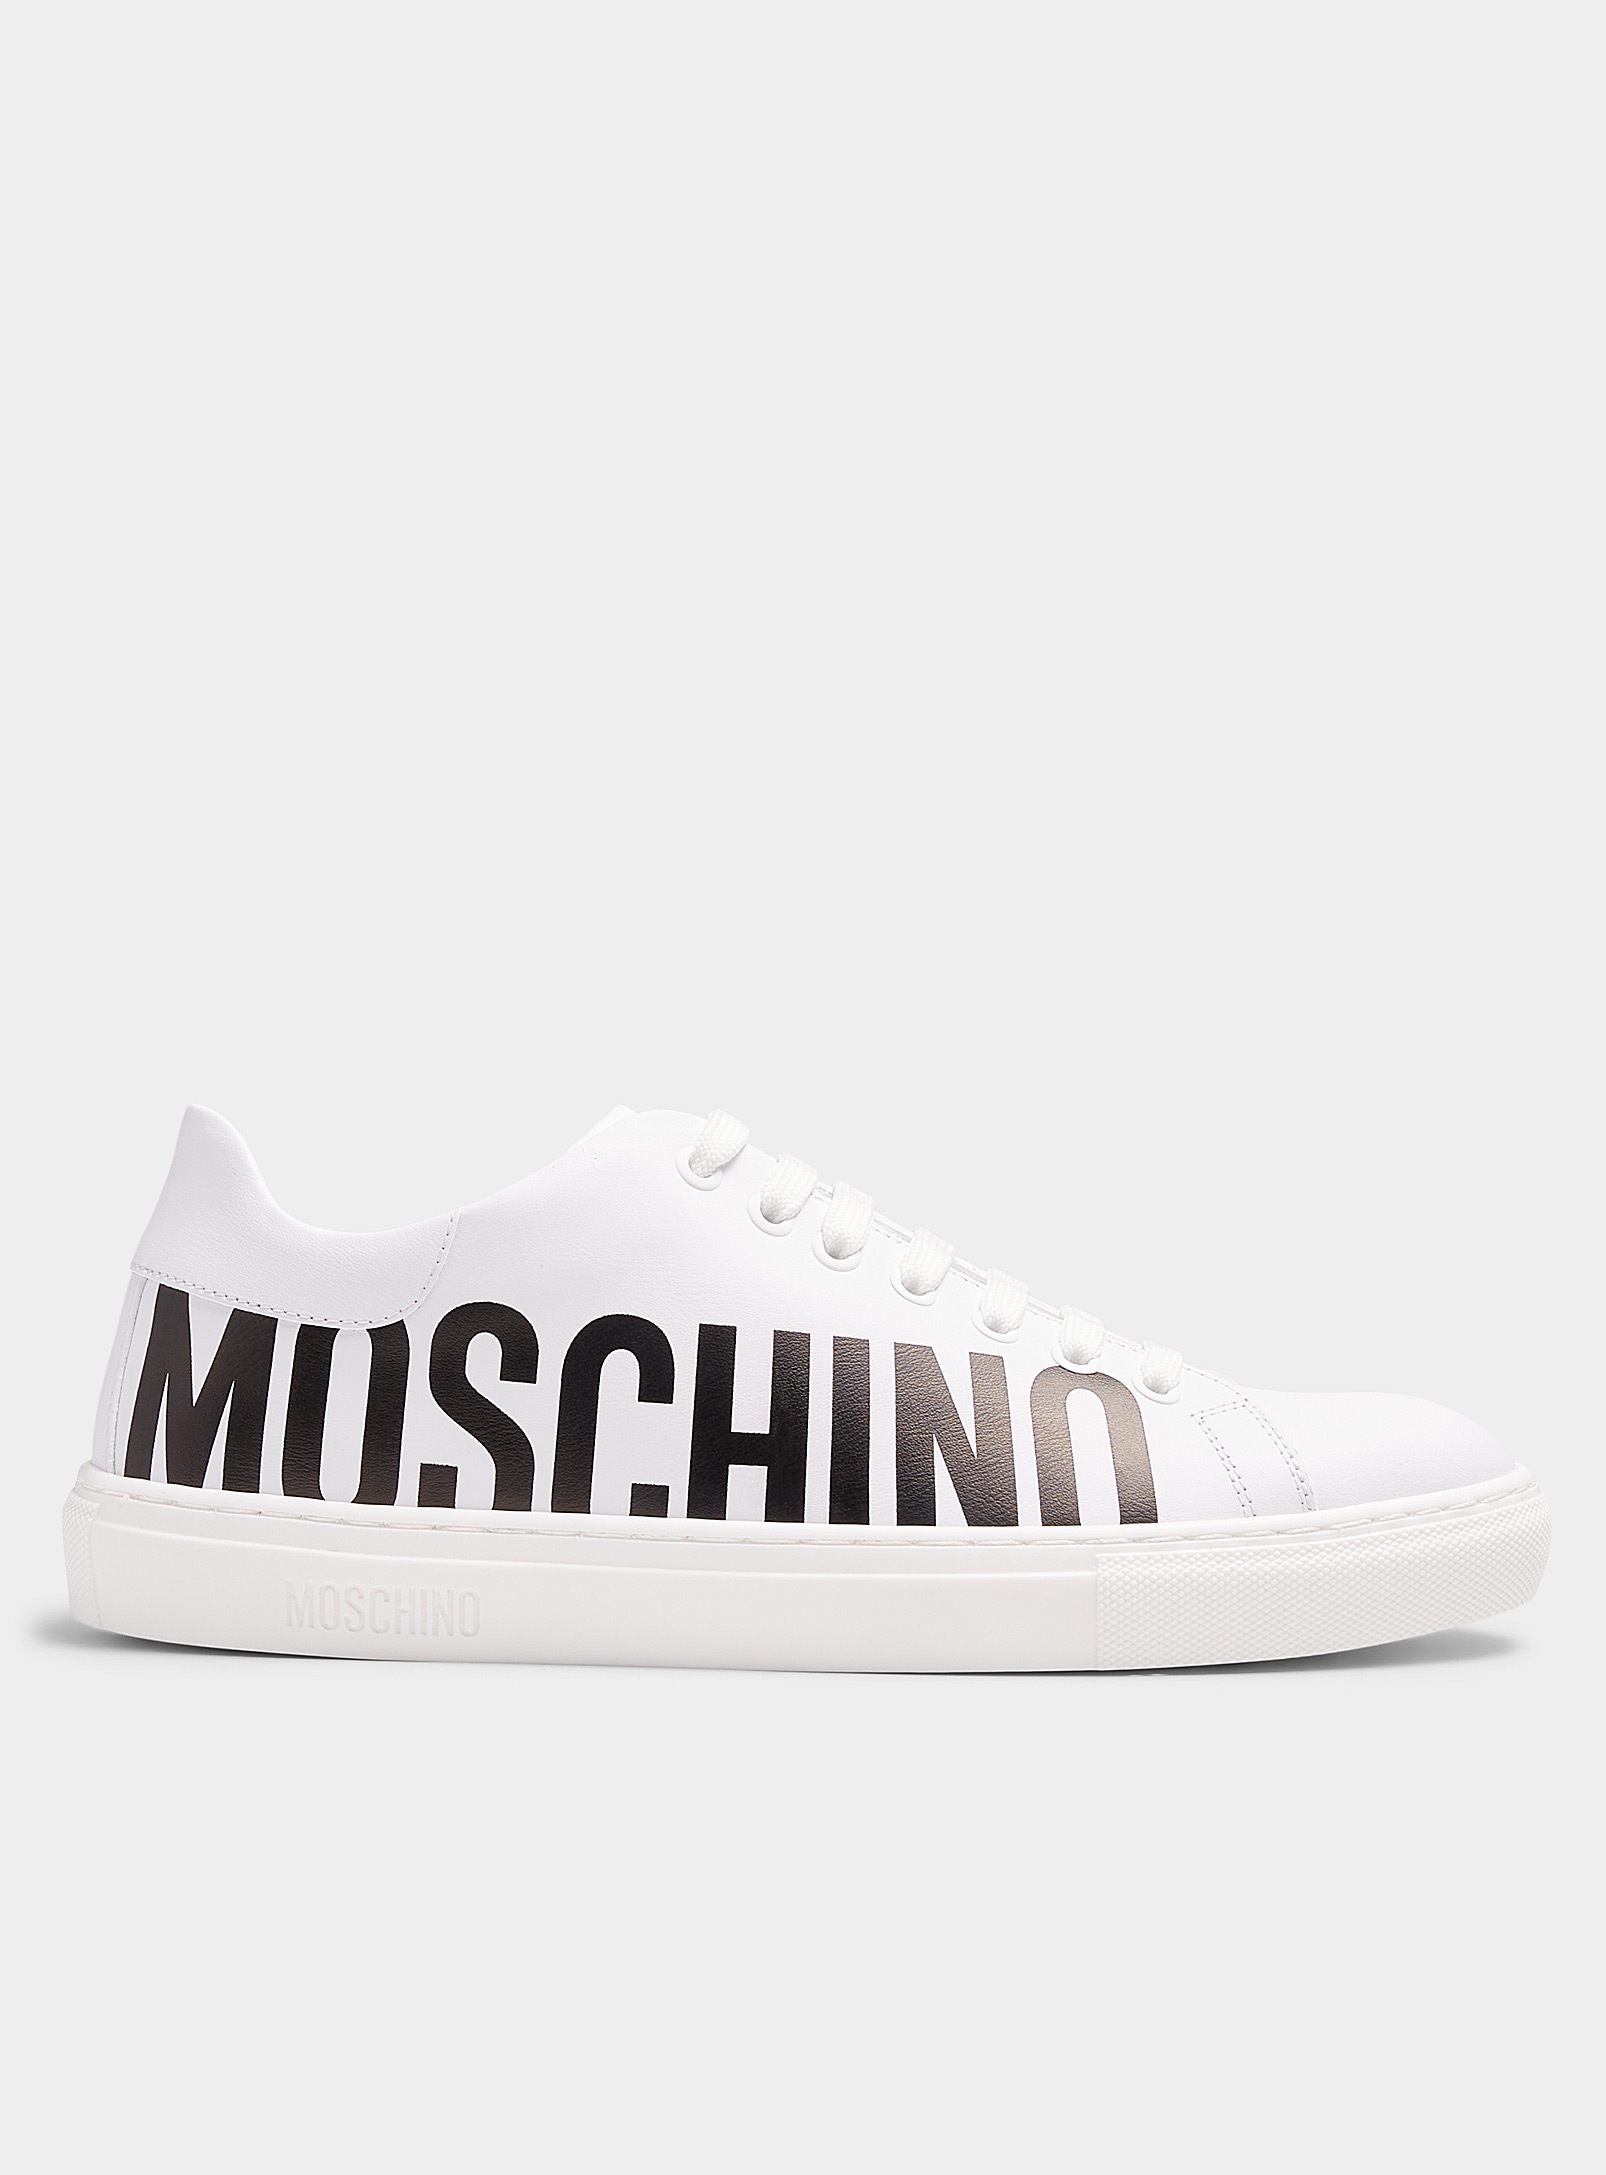 Moschino - Men's Side logo court sneakers Men